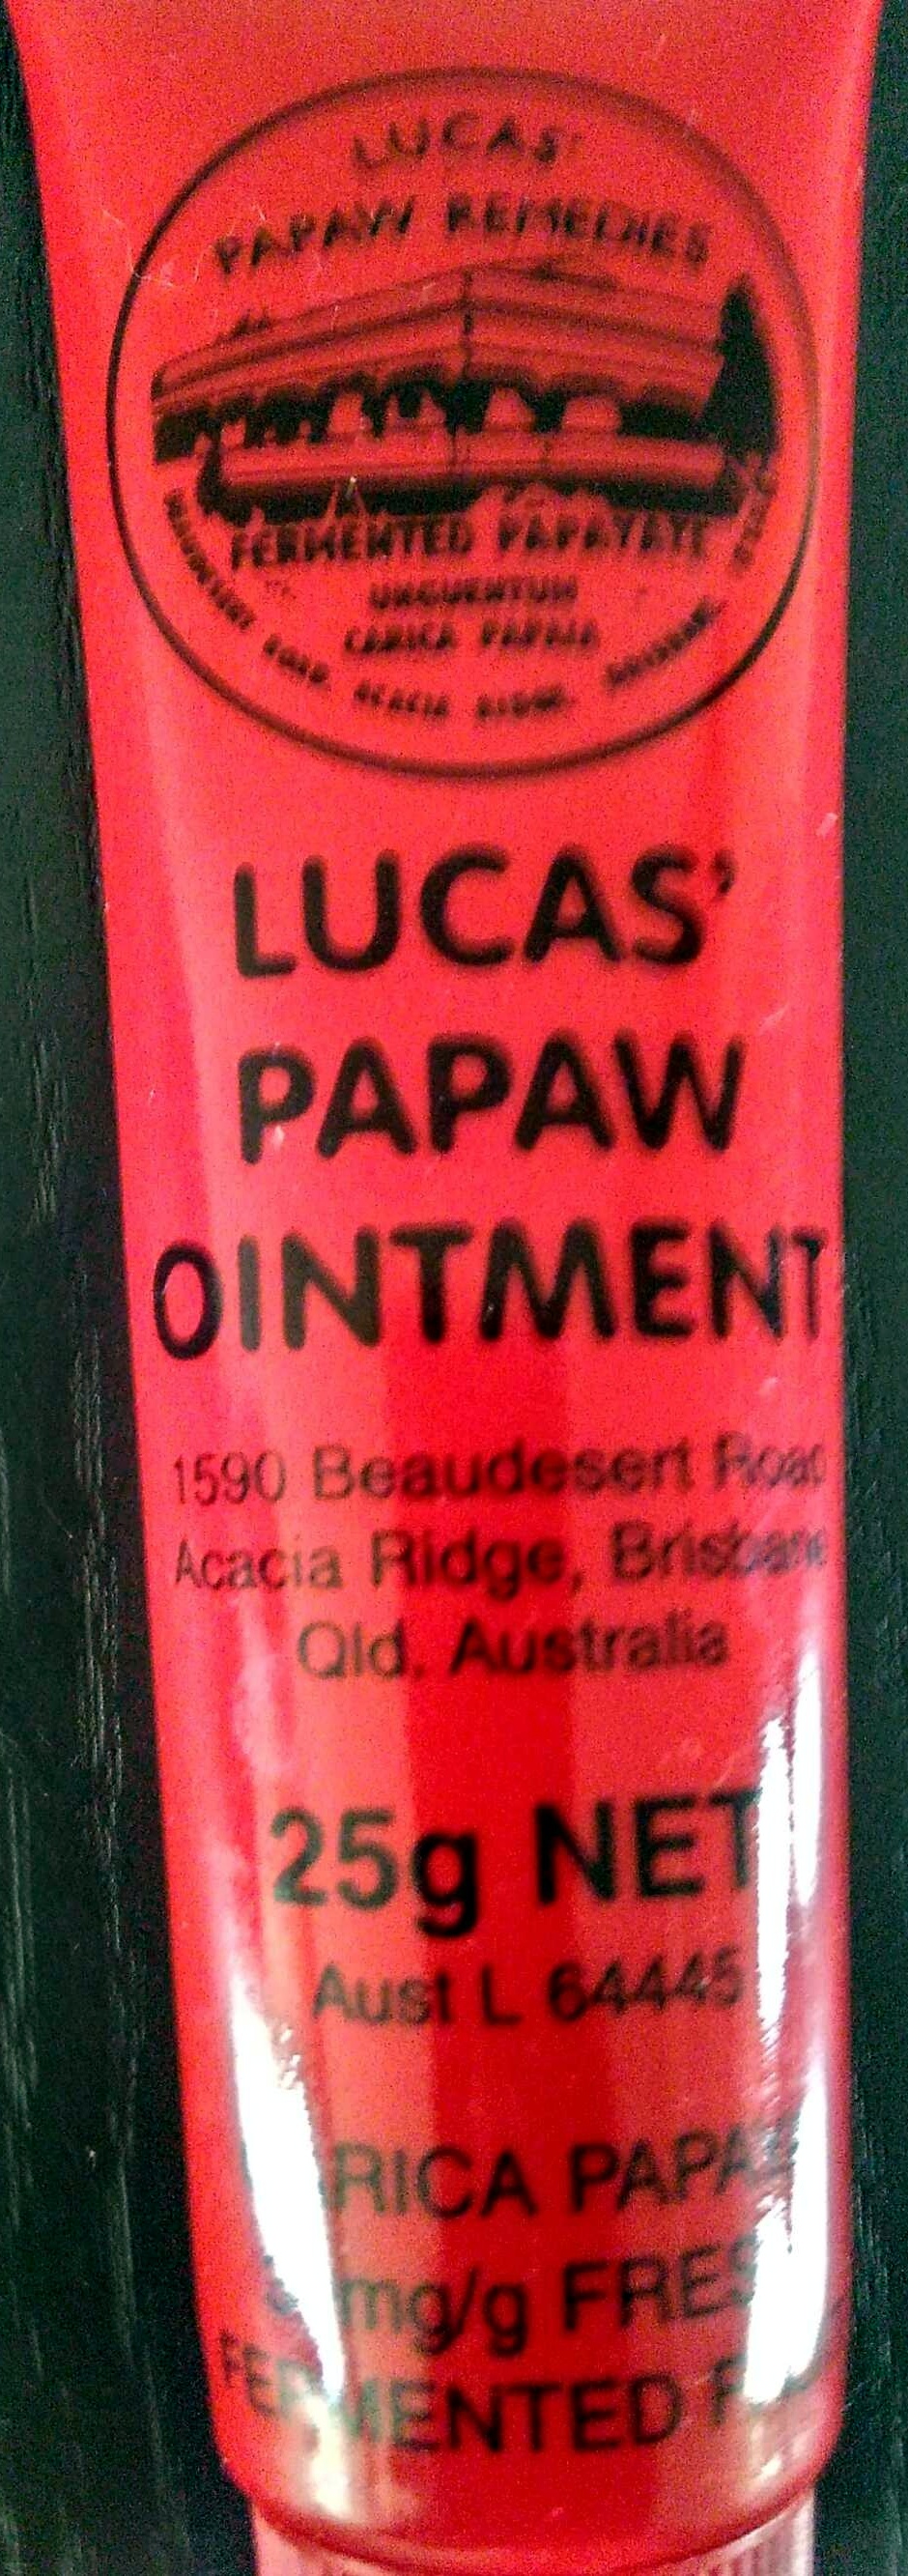 LUCAS' PAPAW OINTMENT - Product - en